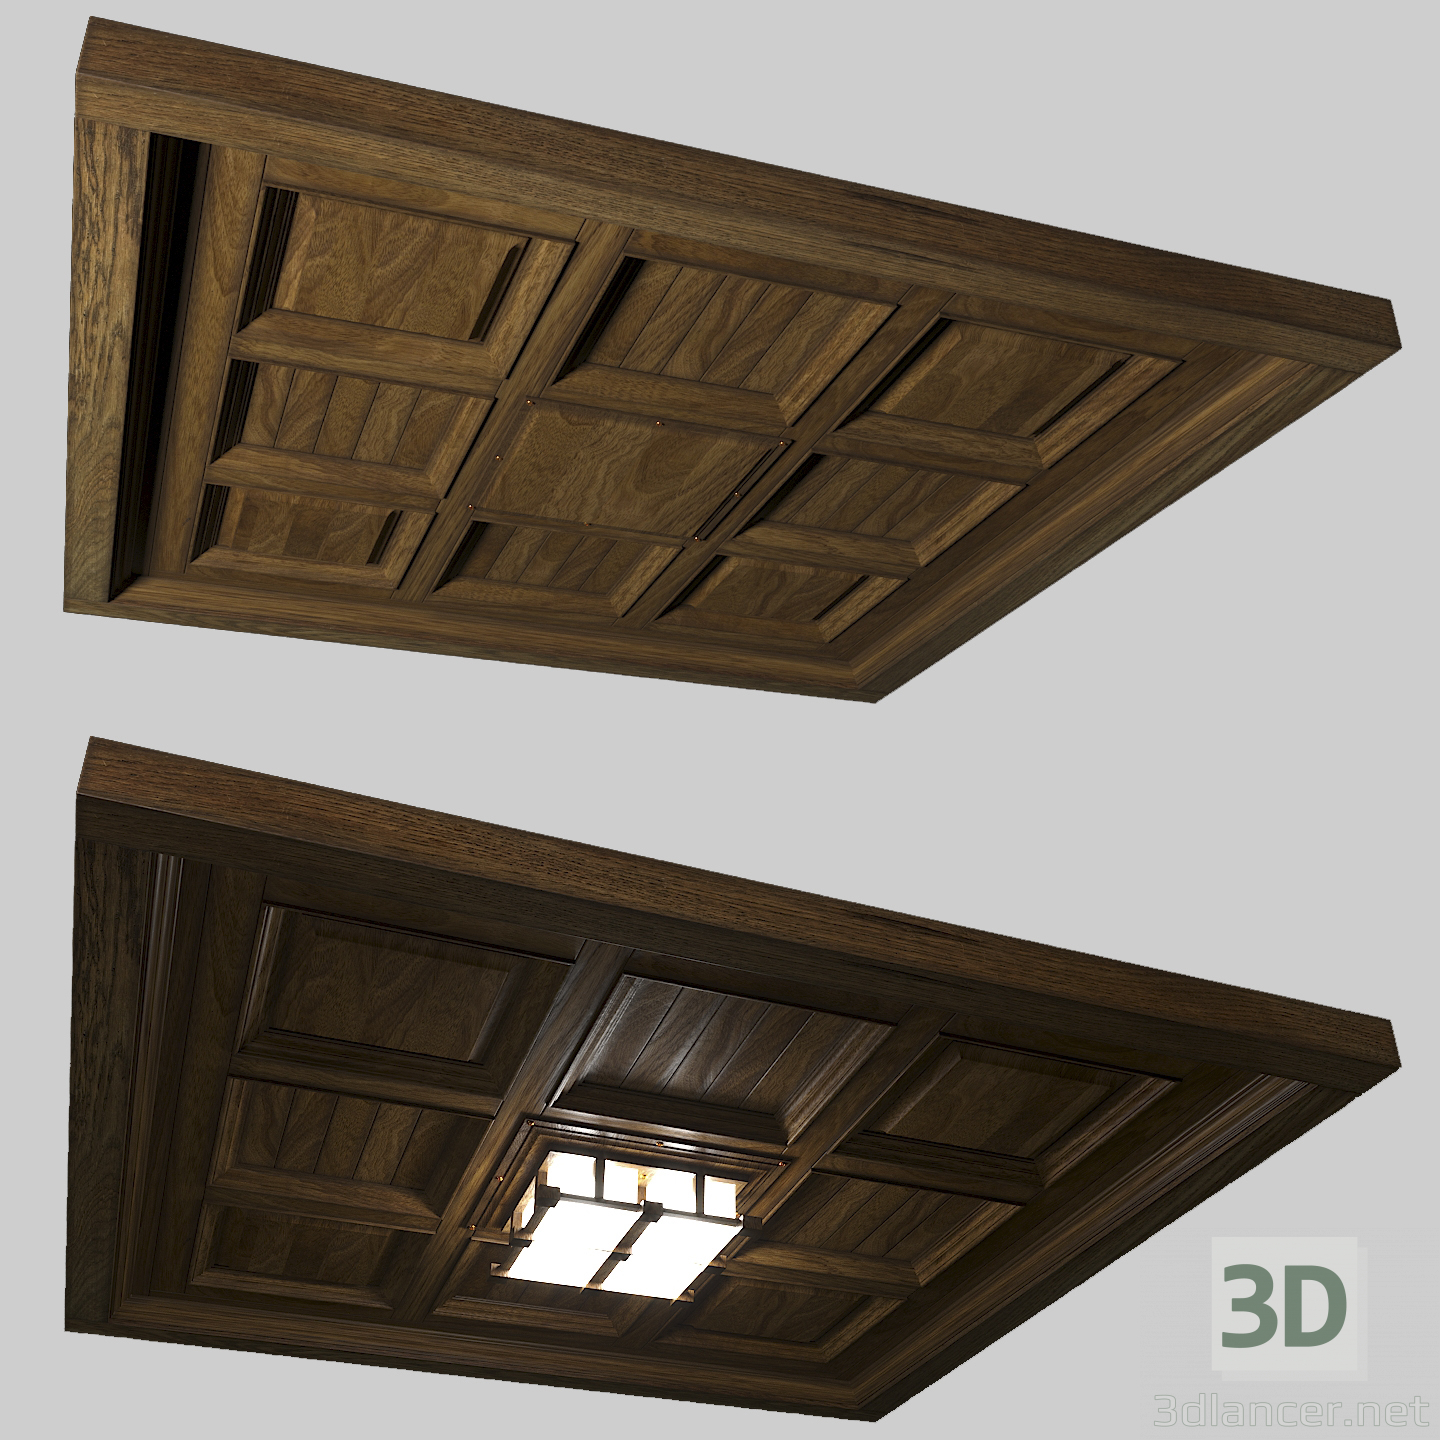 3d Model Wooden Ceiling Design 35579 7812